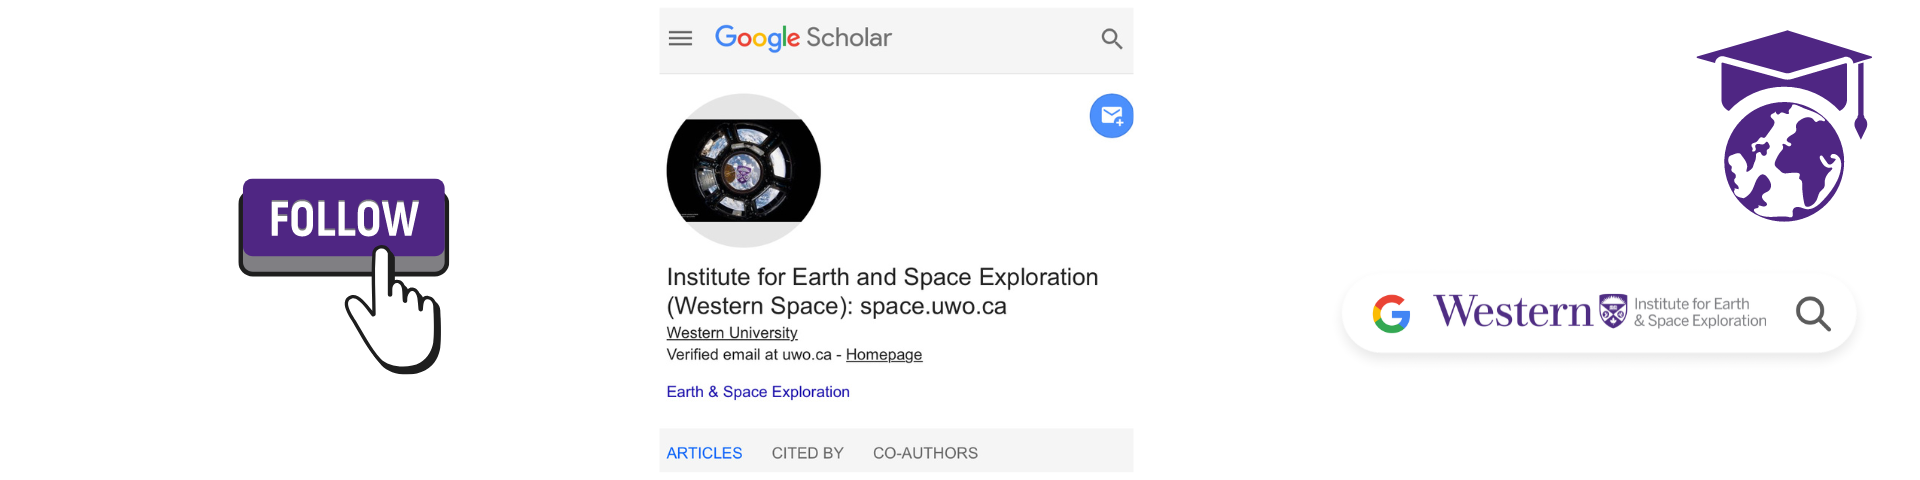 google-scholar-.png